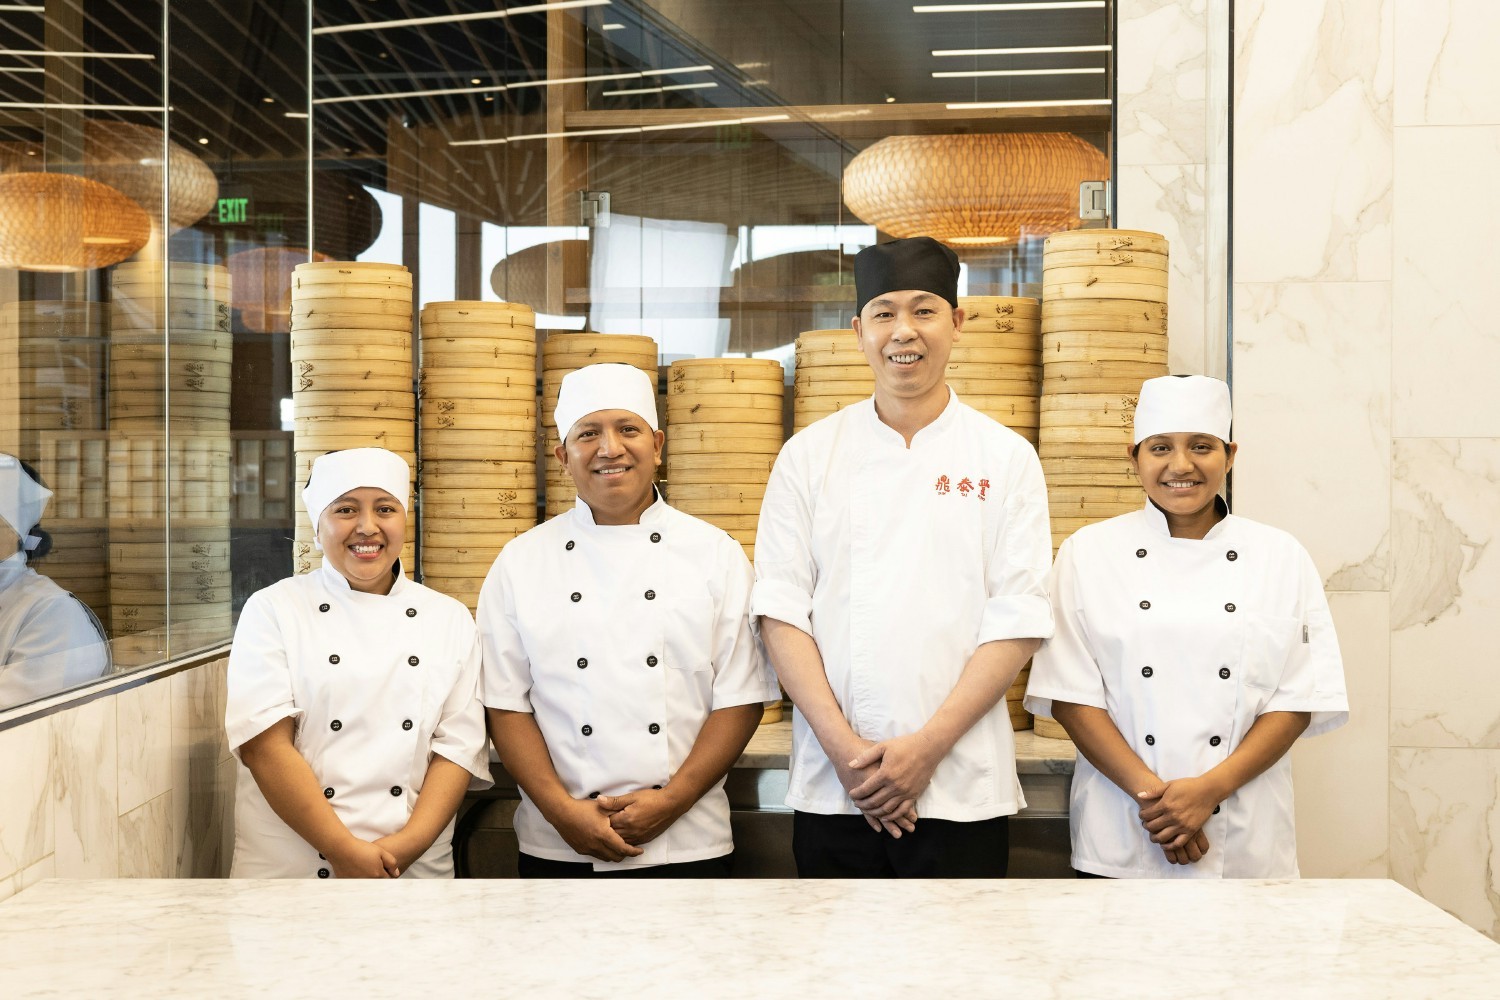 Every Din Tai Fung has a showcase kitchen, where dumpling chefs masterfully handcraft each Xiao Long Bao to perfection